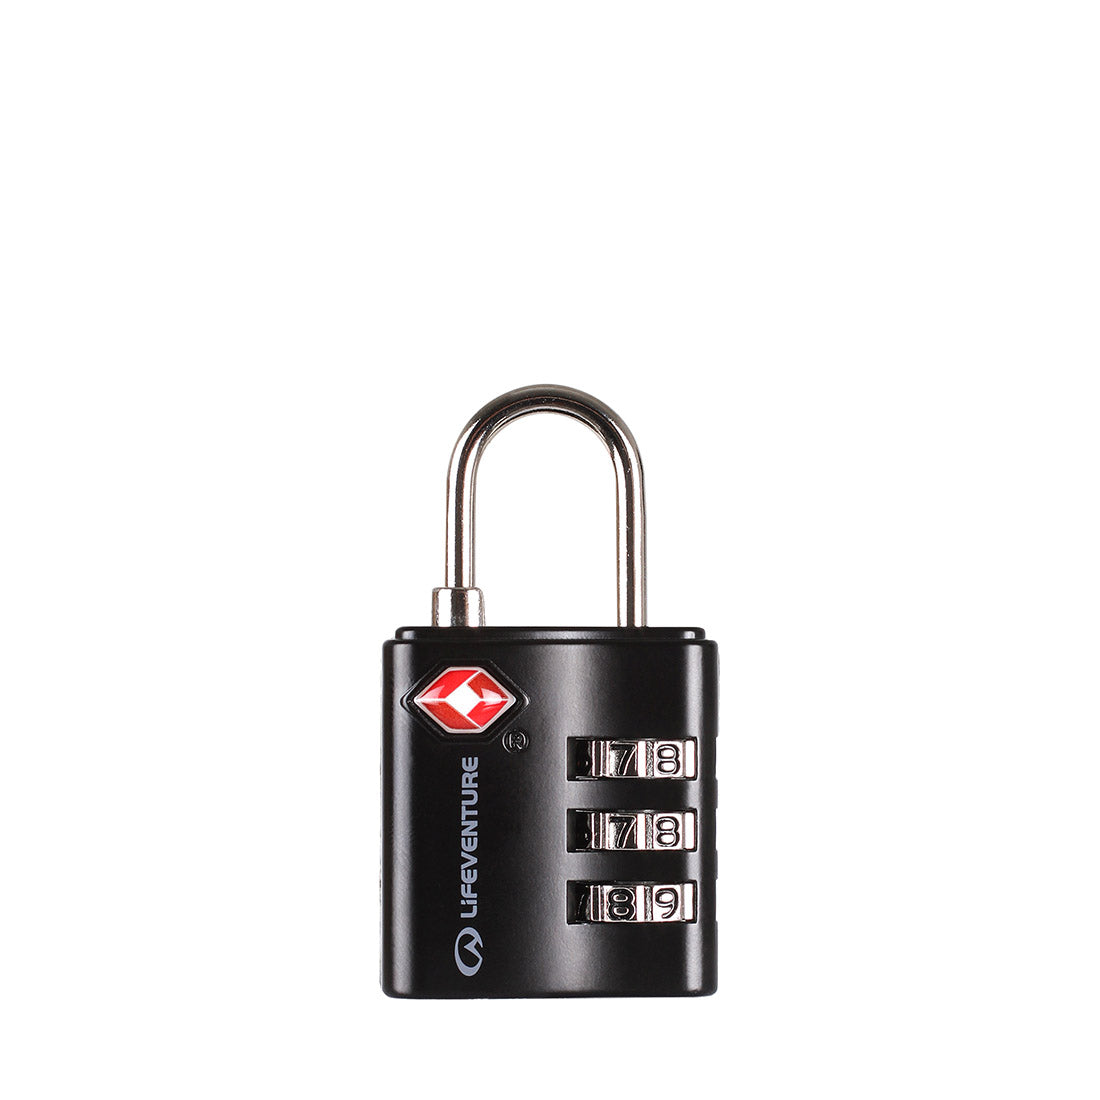 TSA Combination Lock - variant[Black]